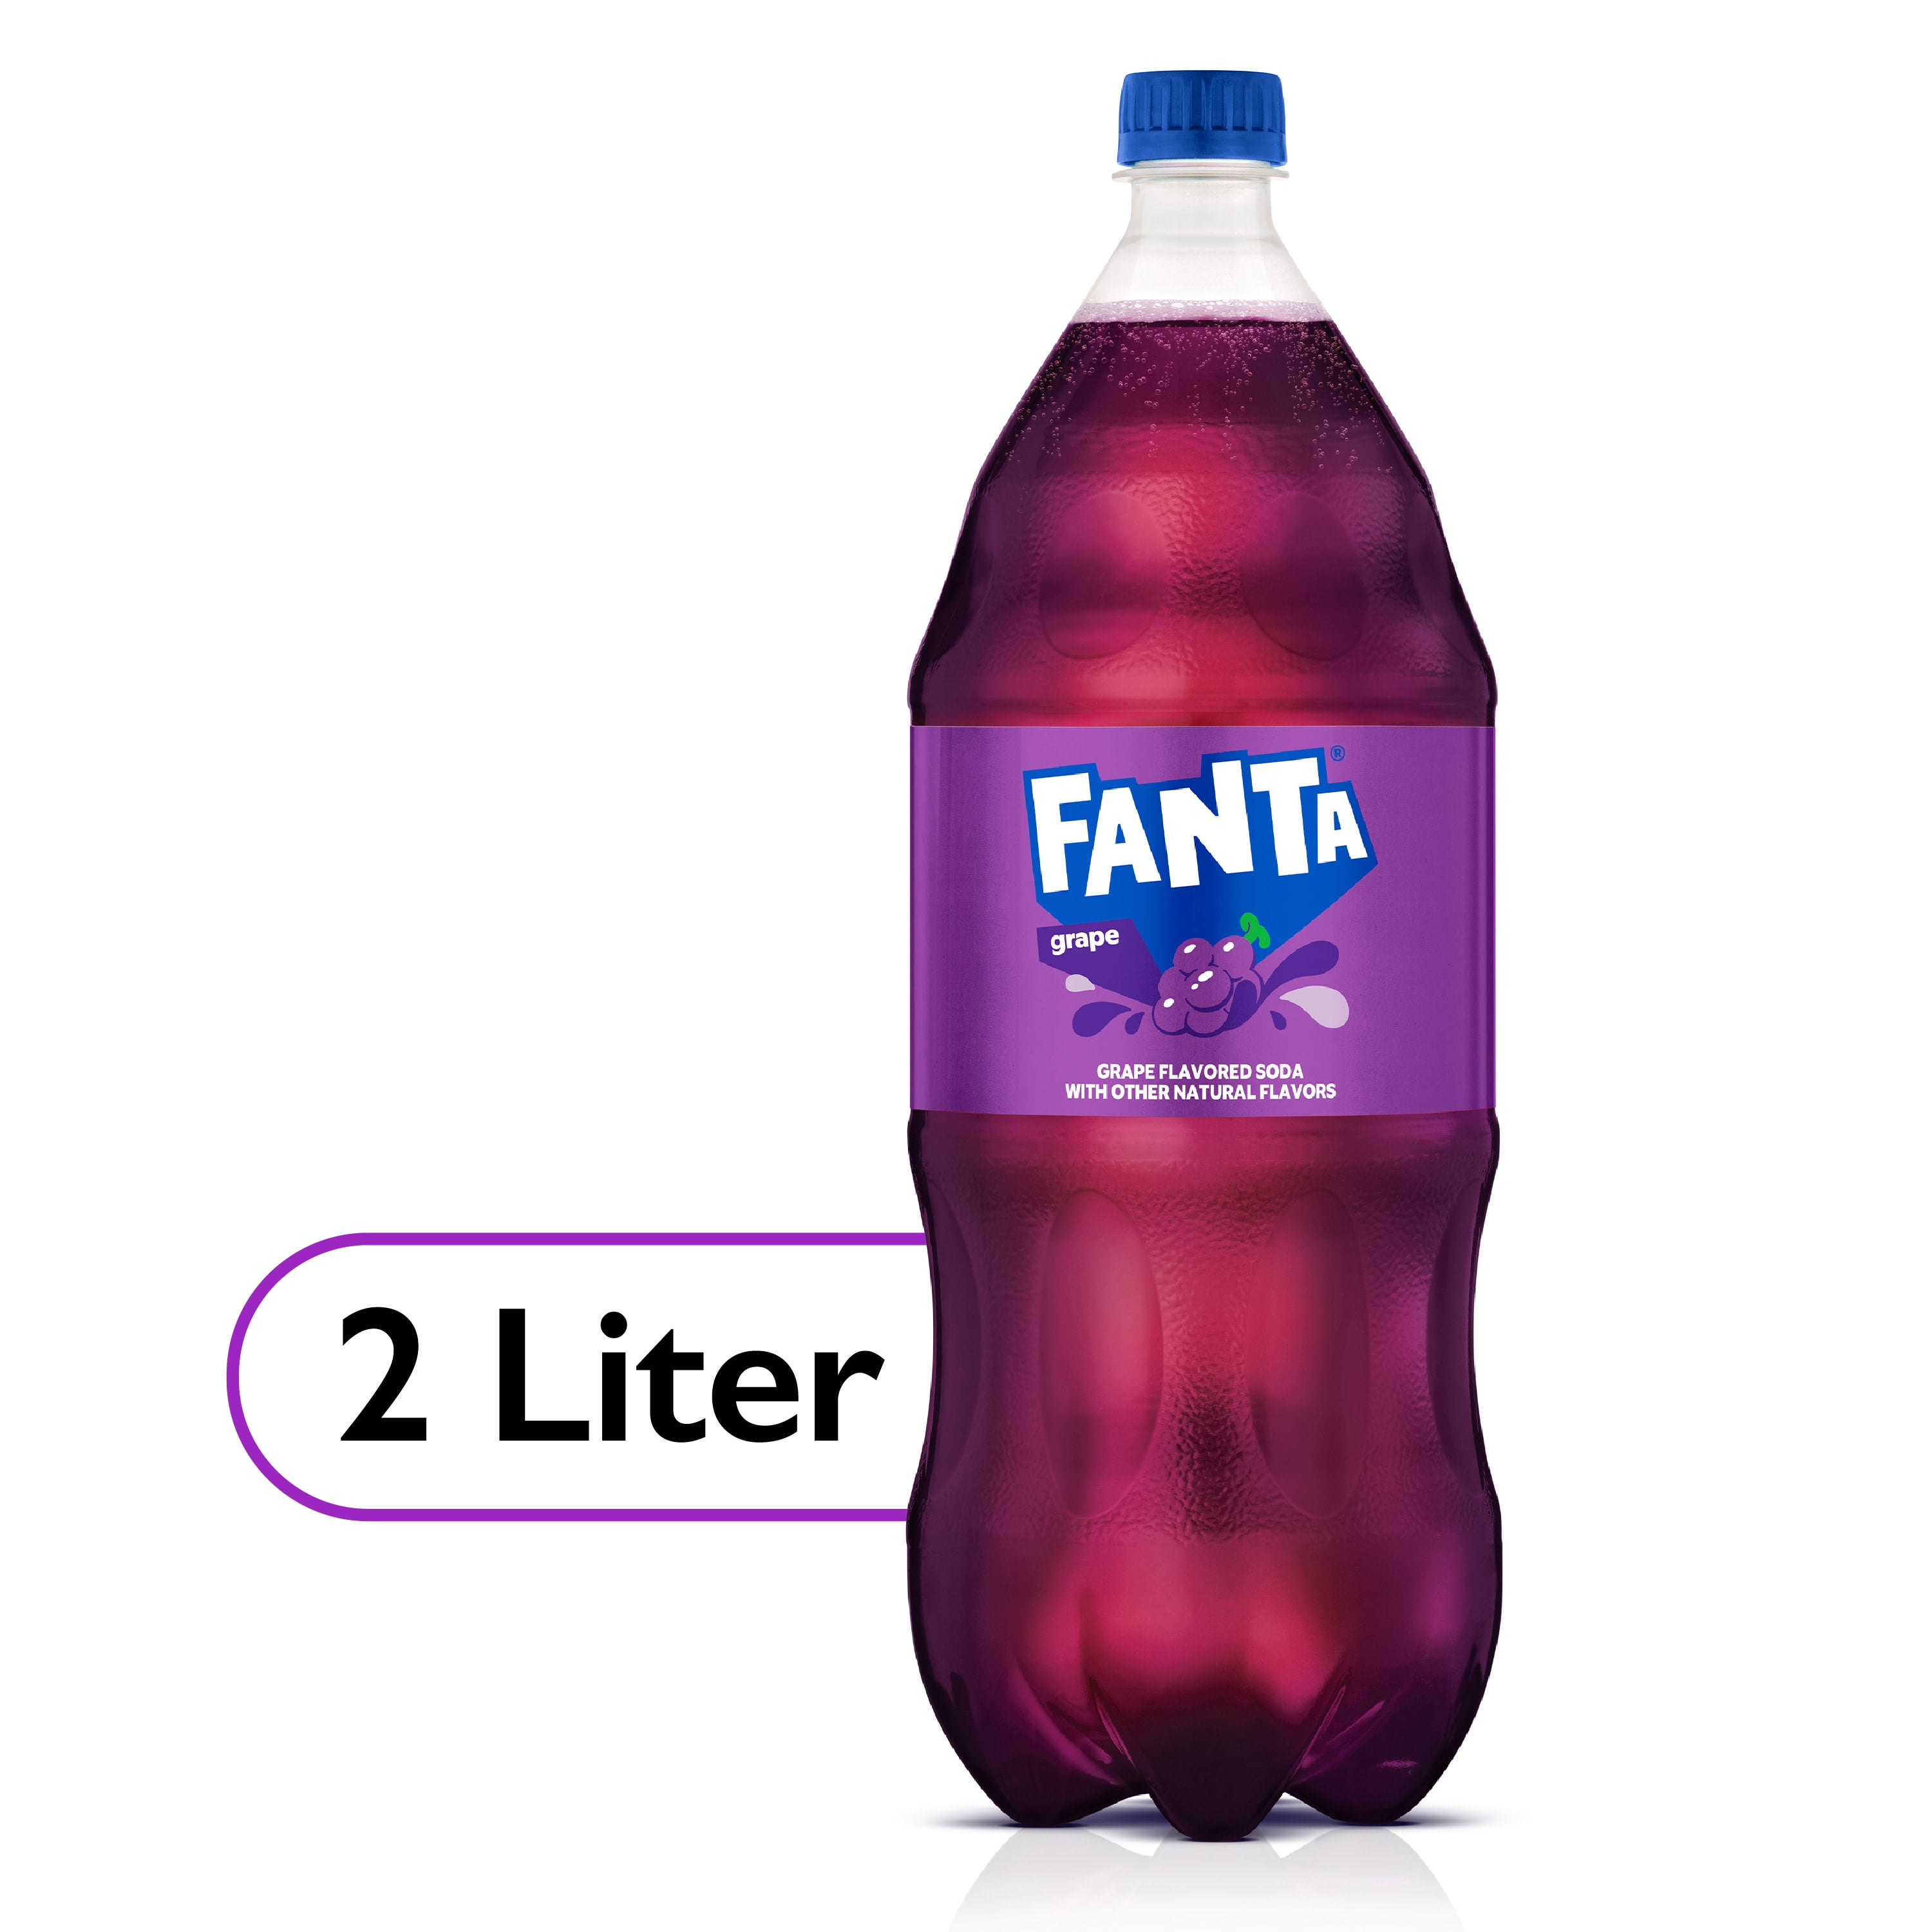 Fanta Grape Fruit Soda Pop, 2 Liter Bottle